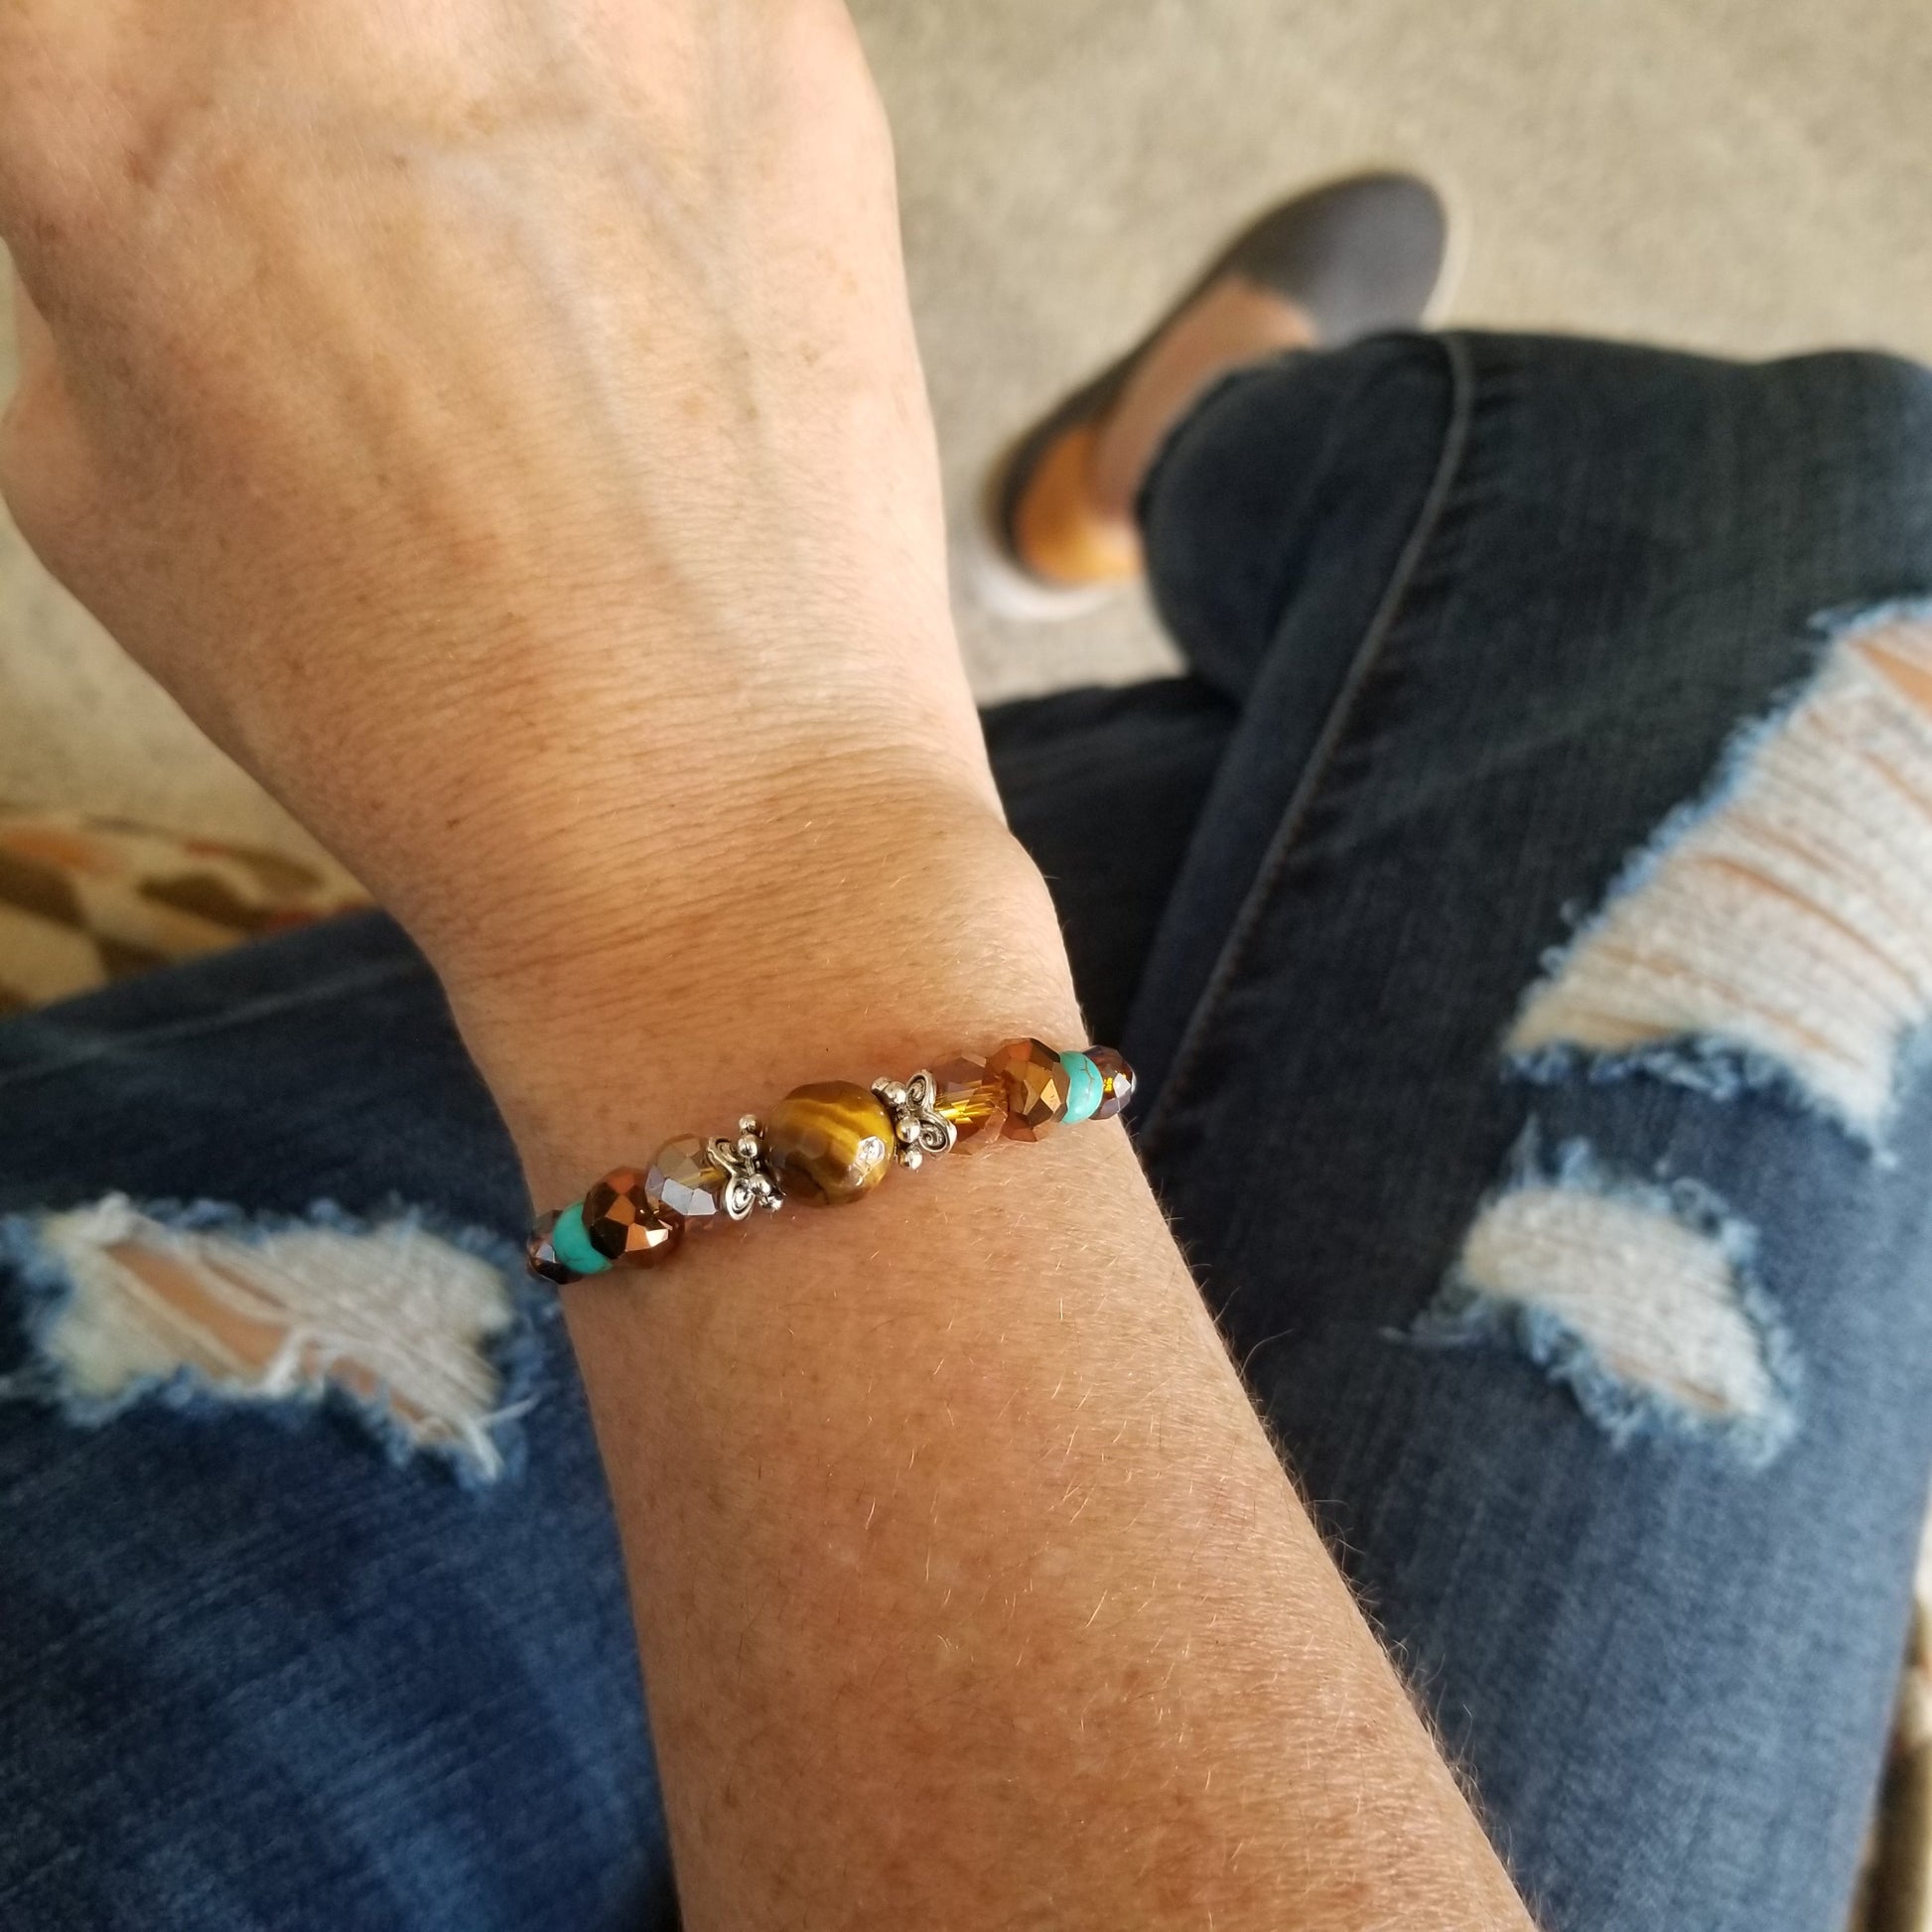 tiger eye and turquoise beads wrap bracelet on wrist